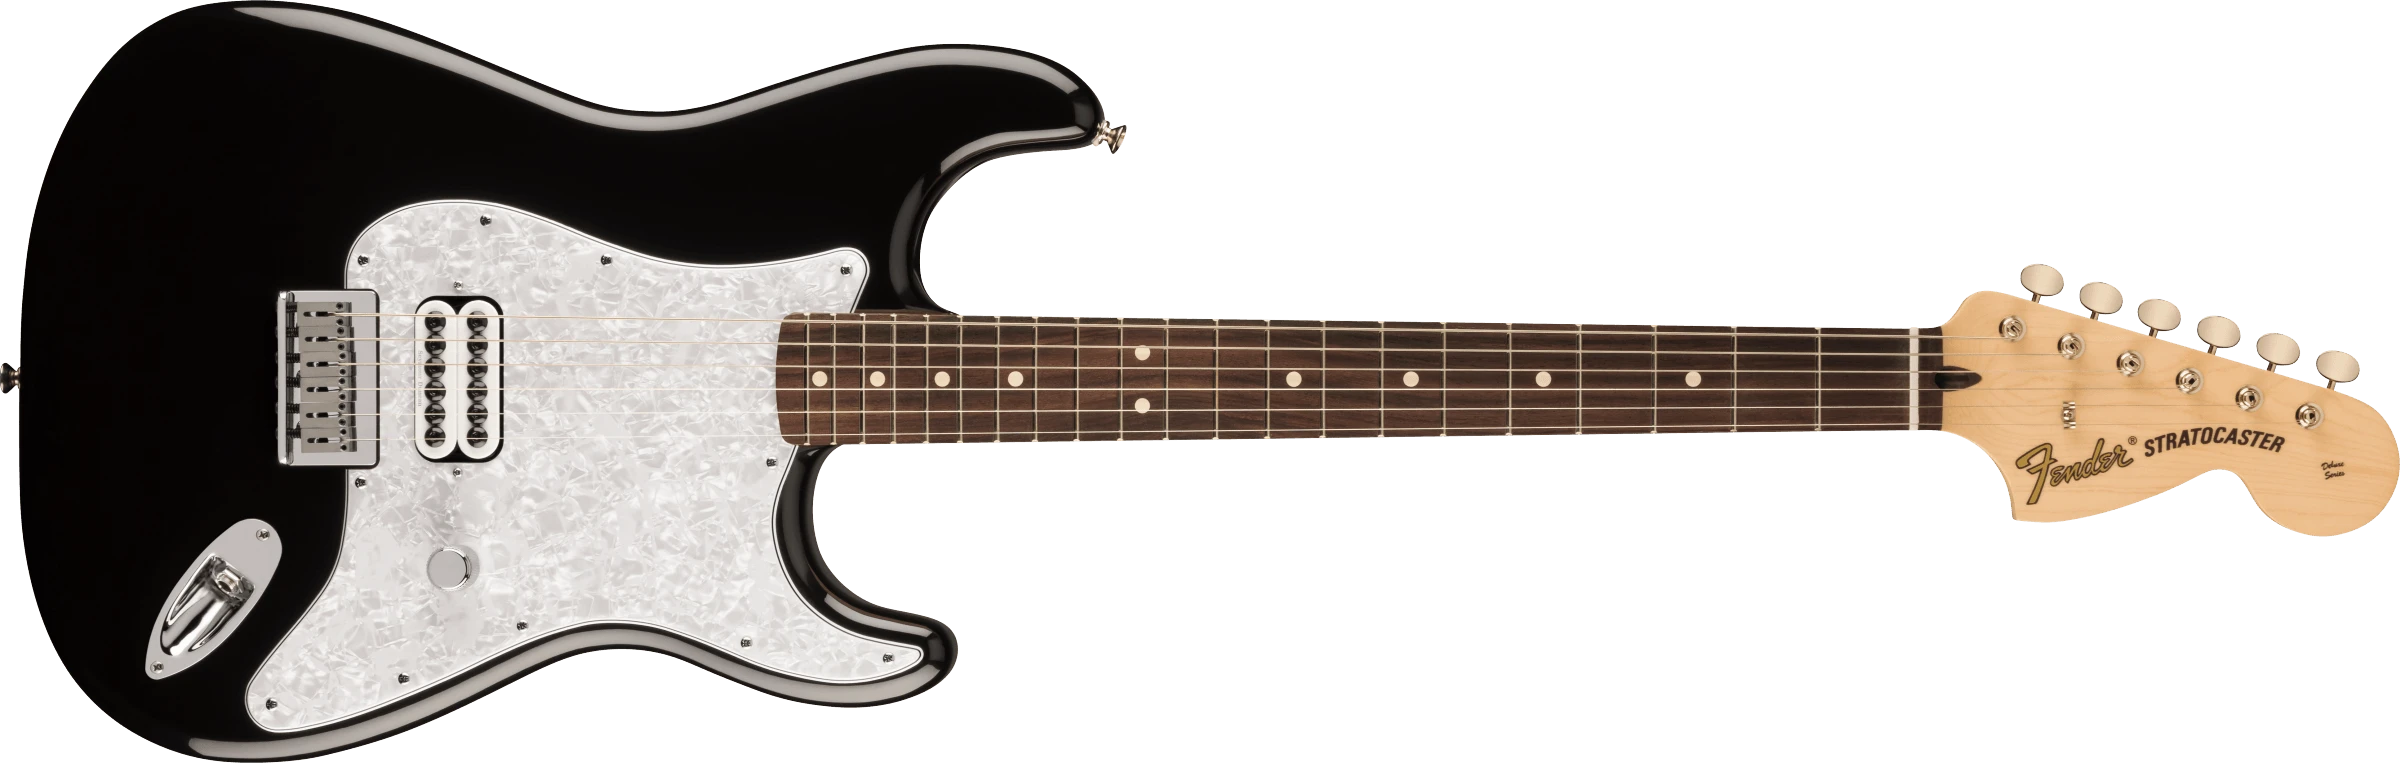 Fender Strat Artist Tom Delonge LTD blk/rw